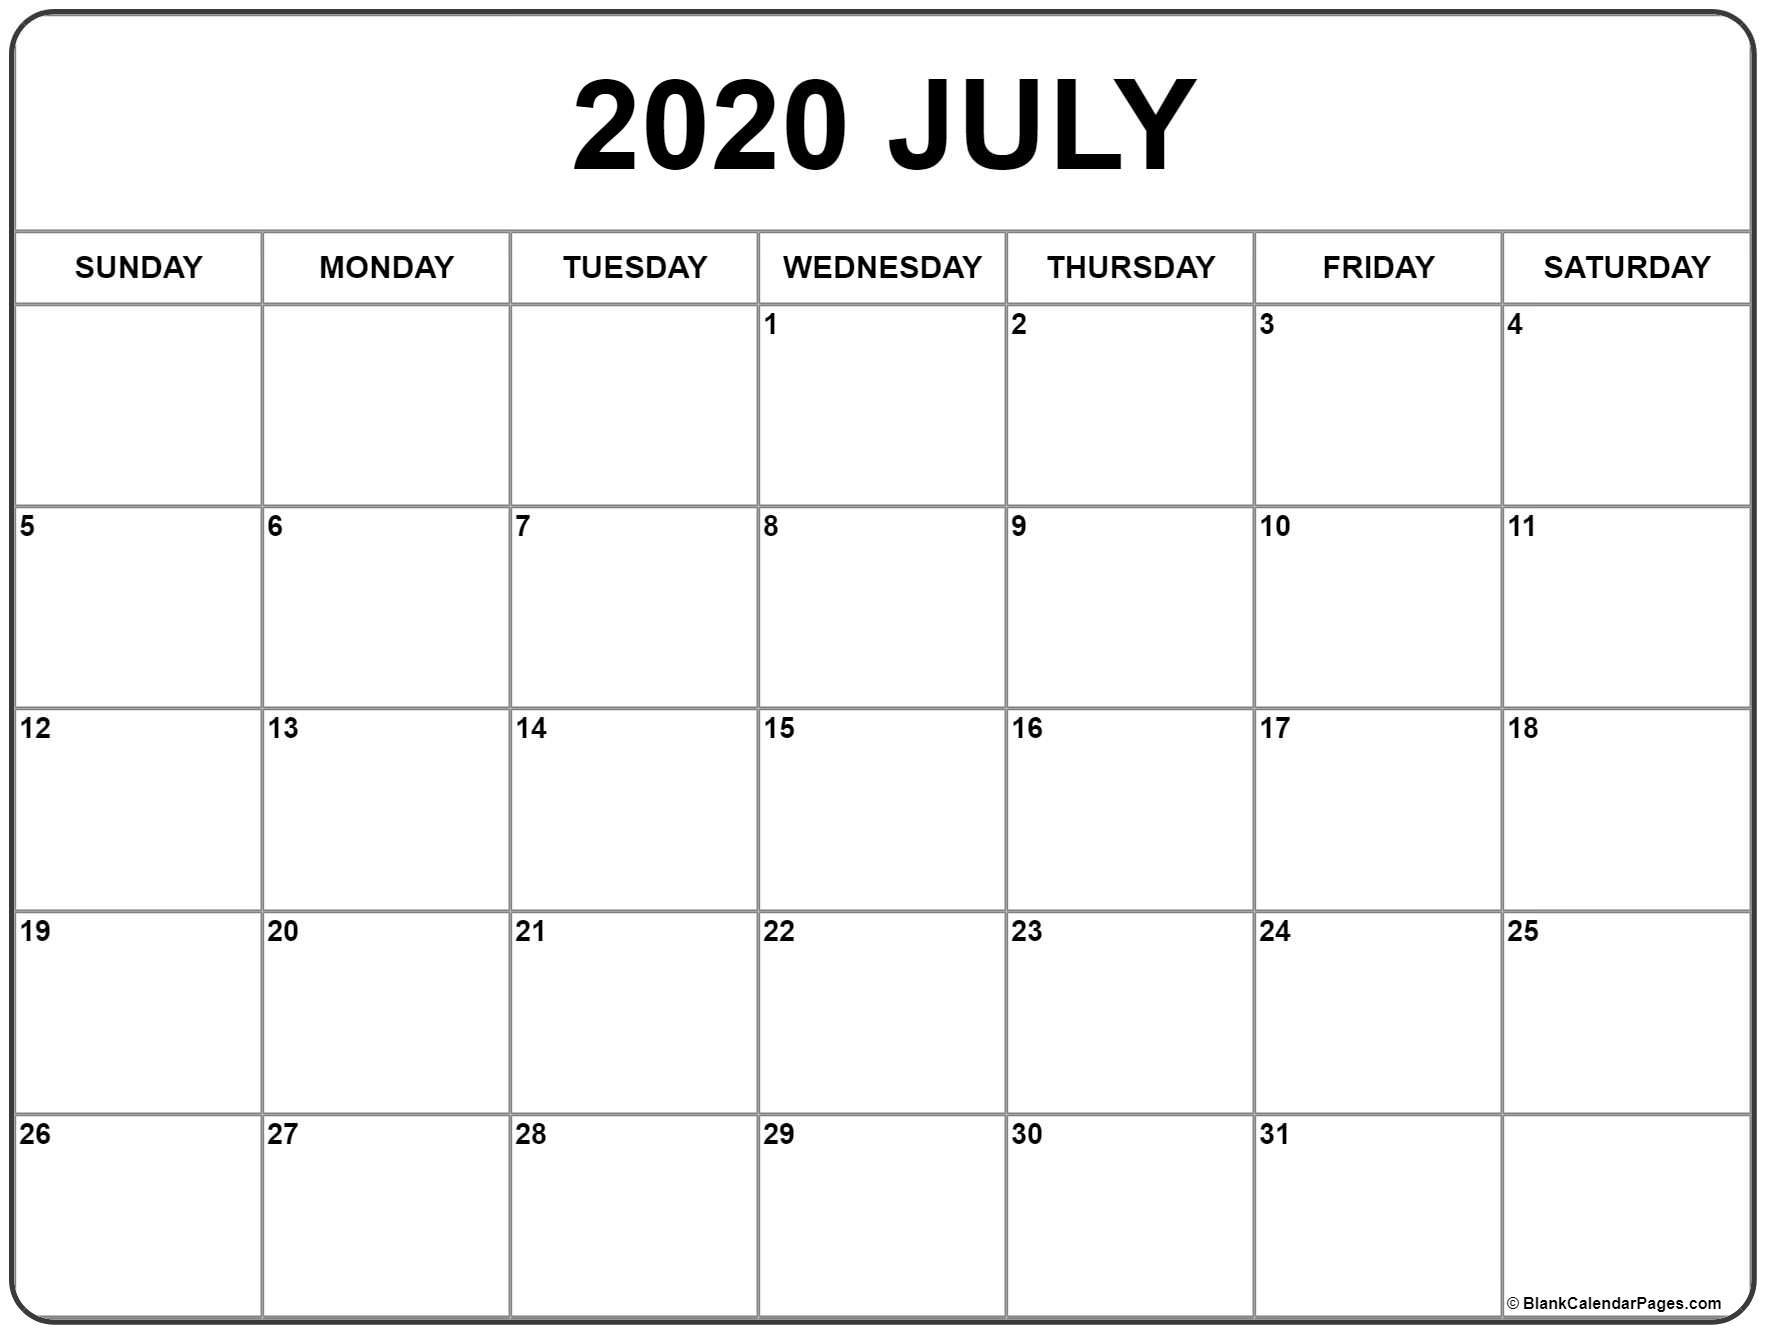 July 2020 Calendar | Free Printable Monthly Calendars-July 2020 Large Claendar Template